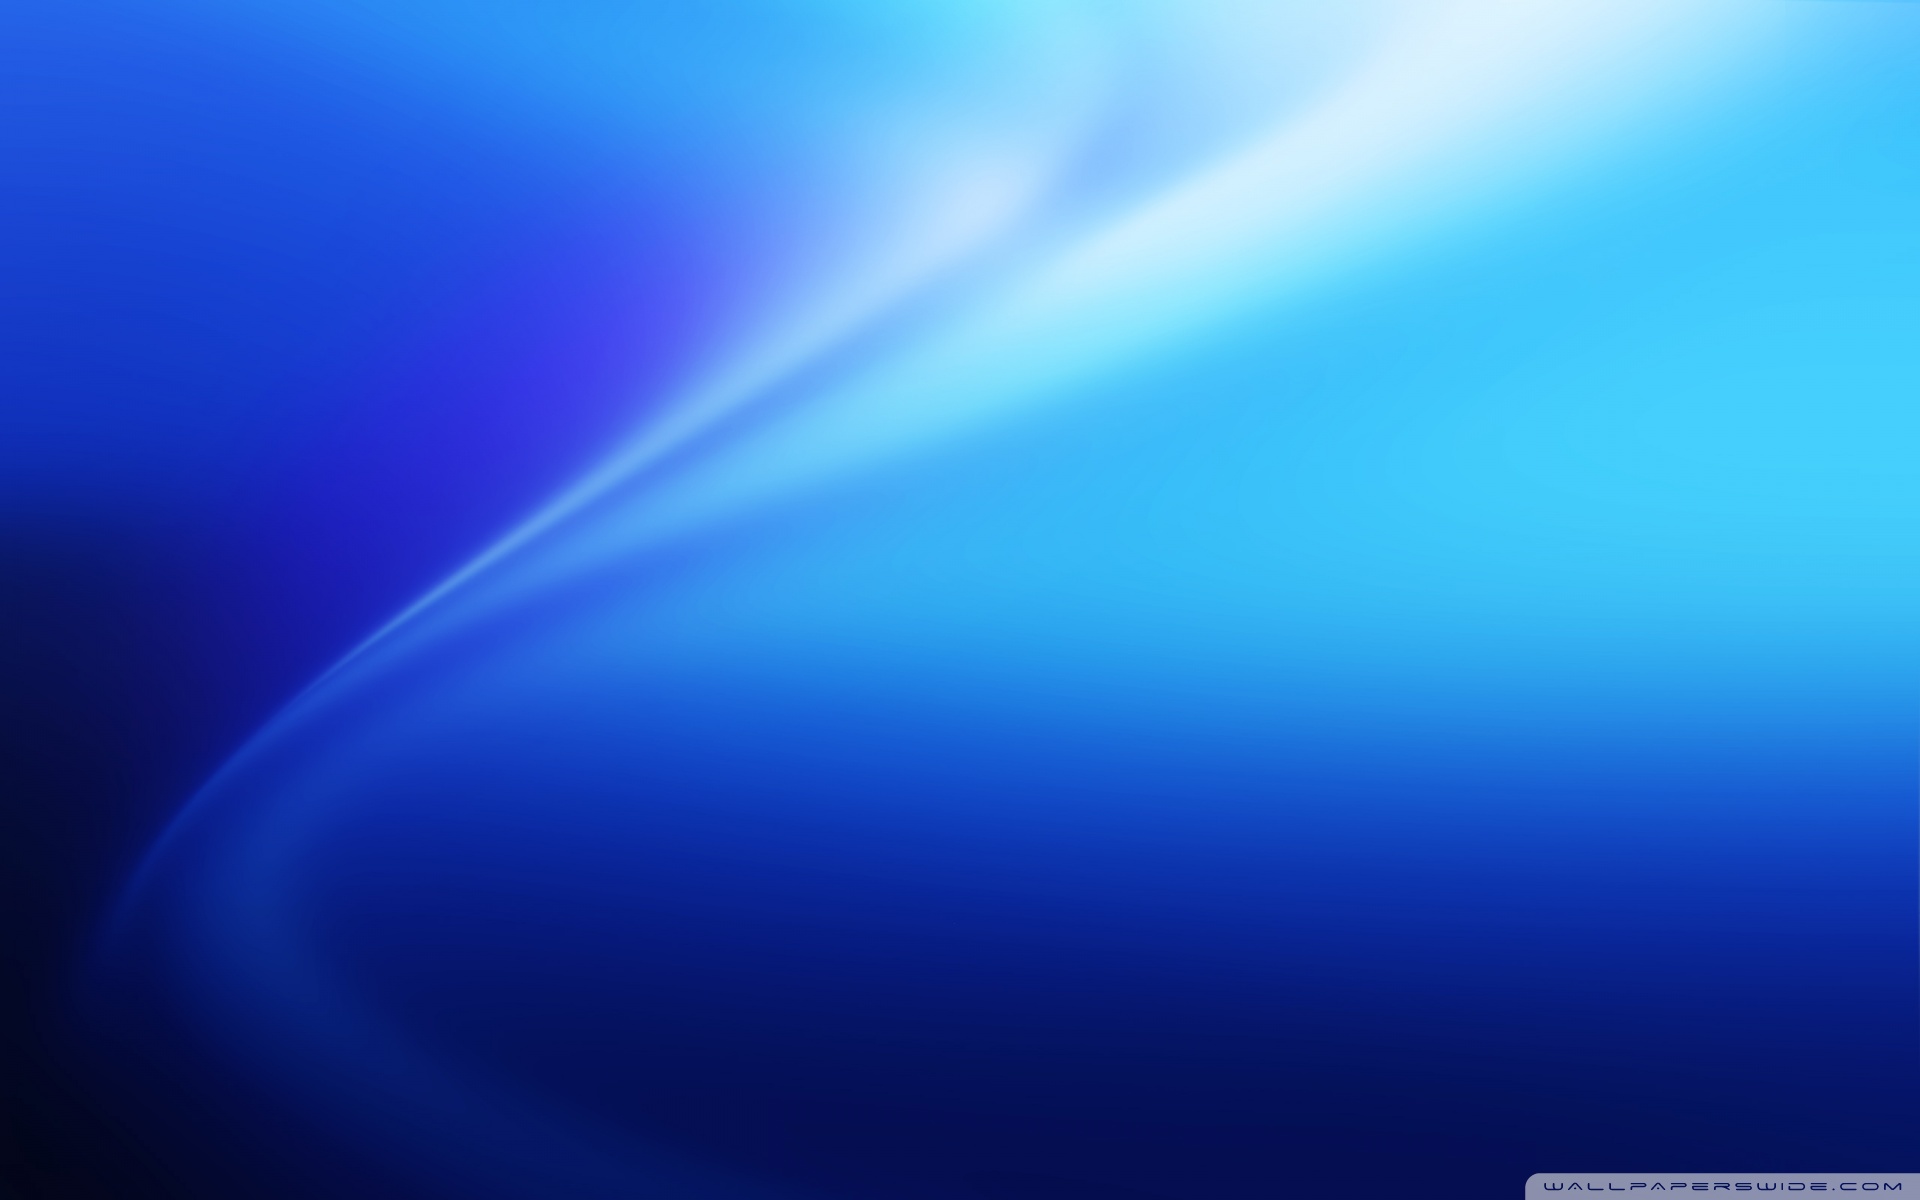 Wavy Blue Background Vector Graphic Ultra HD Desktop Background Wallpaper for 4K UHD TV, Tablet